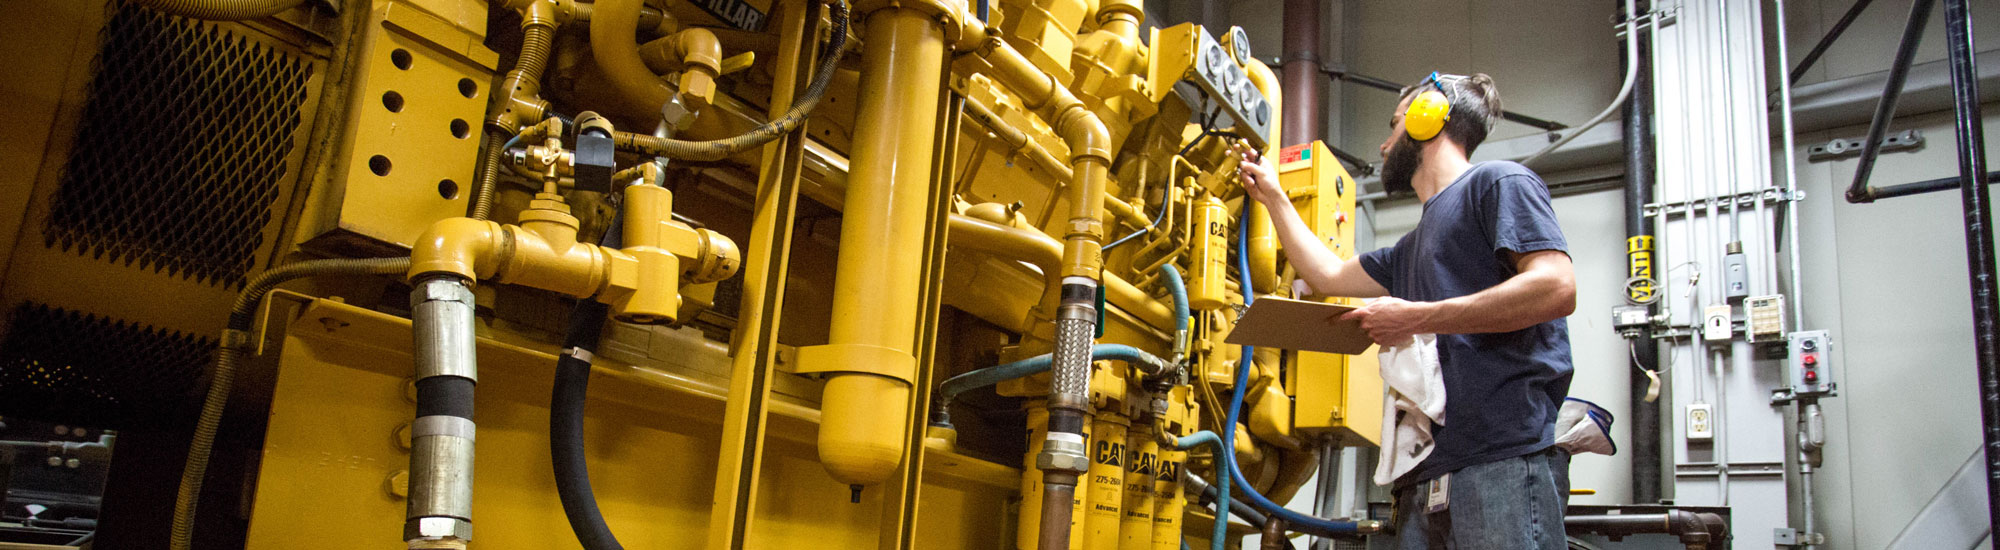 A power plant employee checks on a diesel generator.